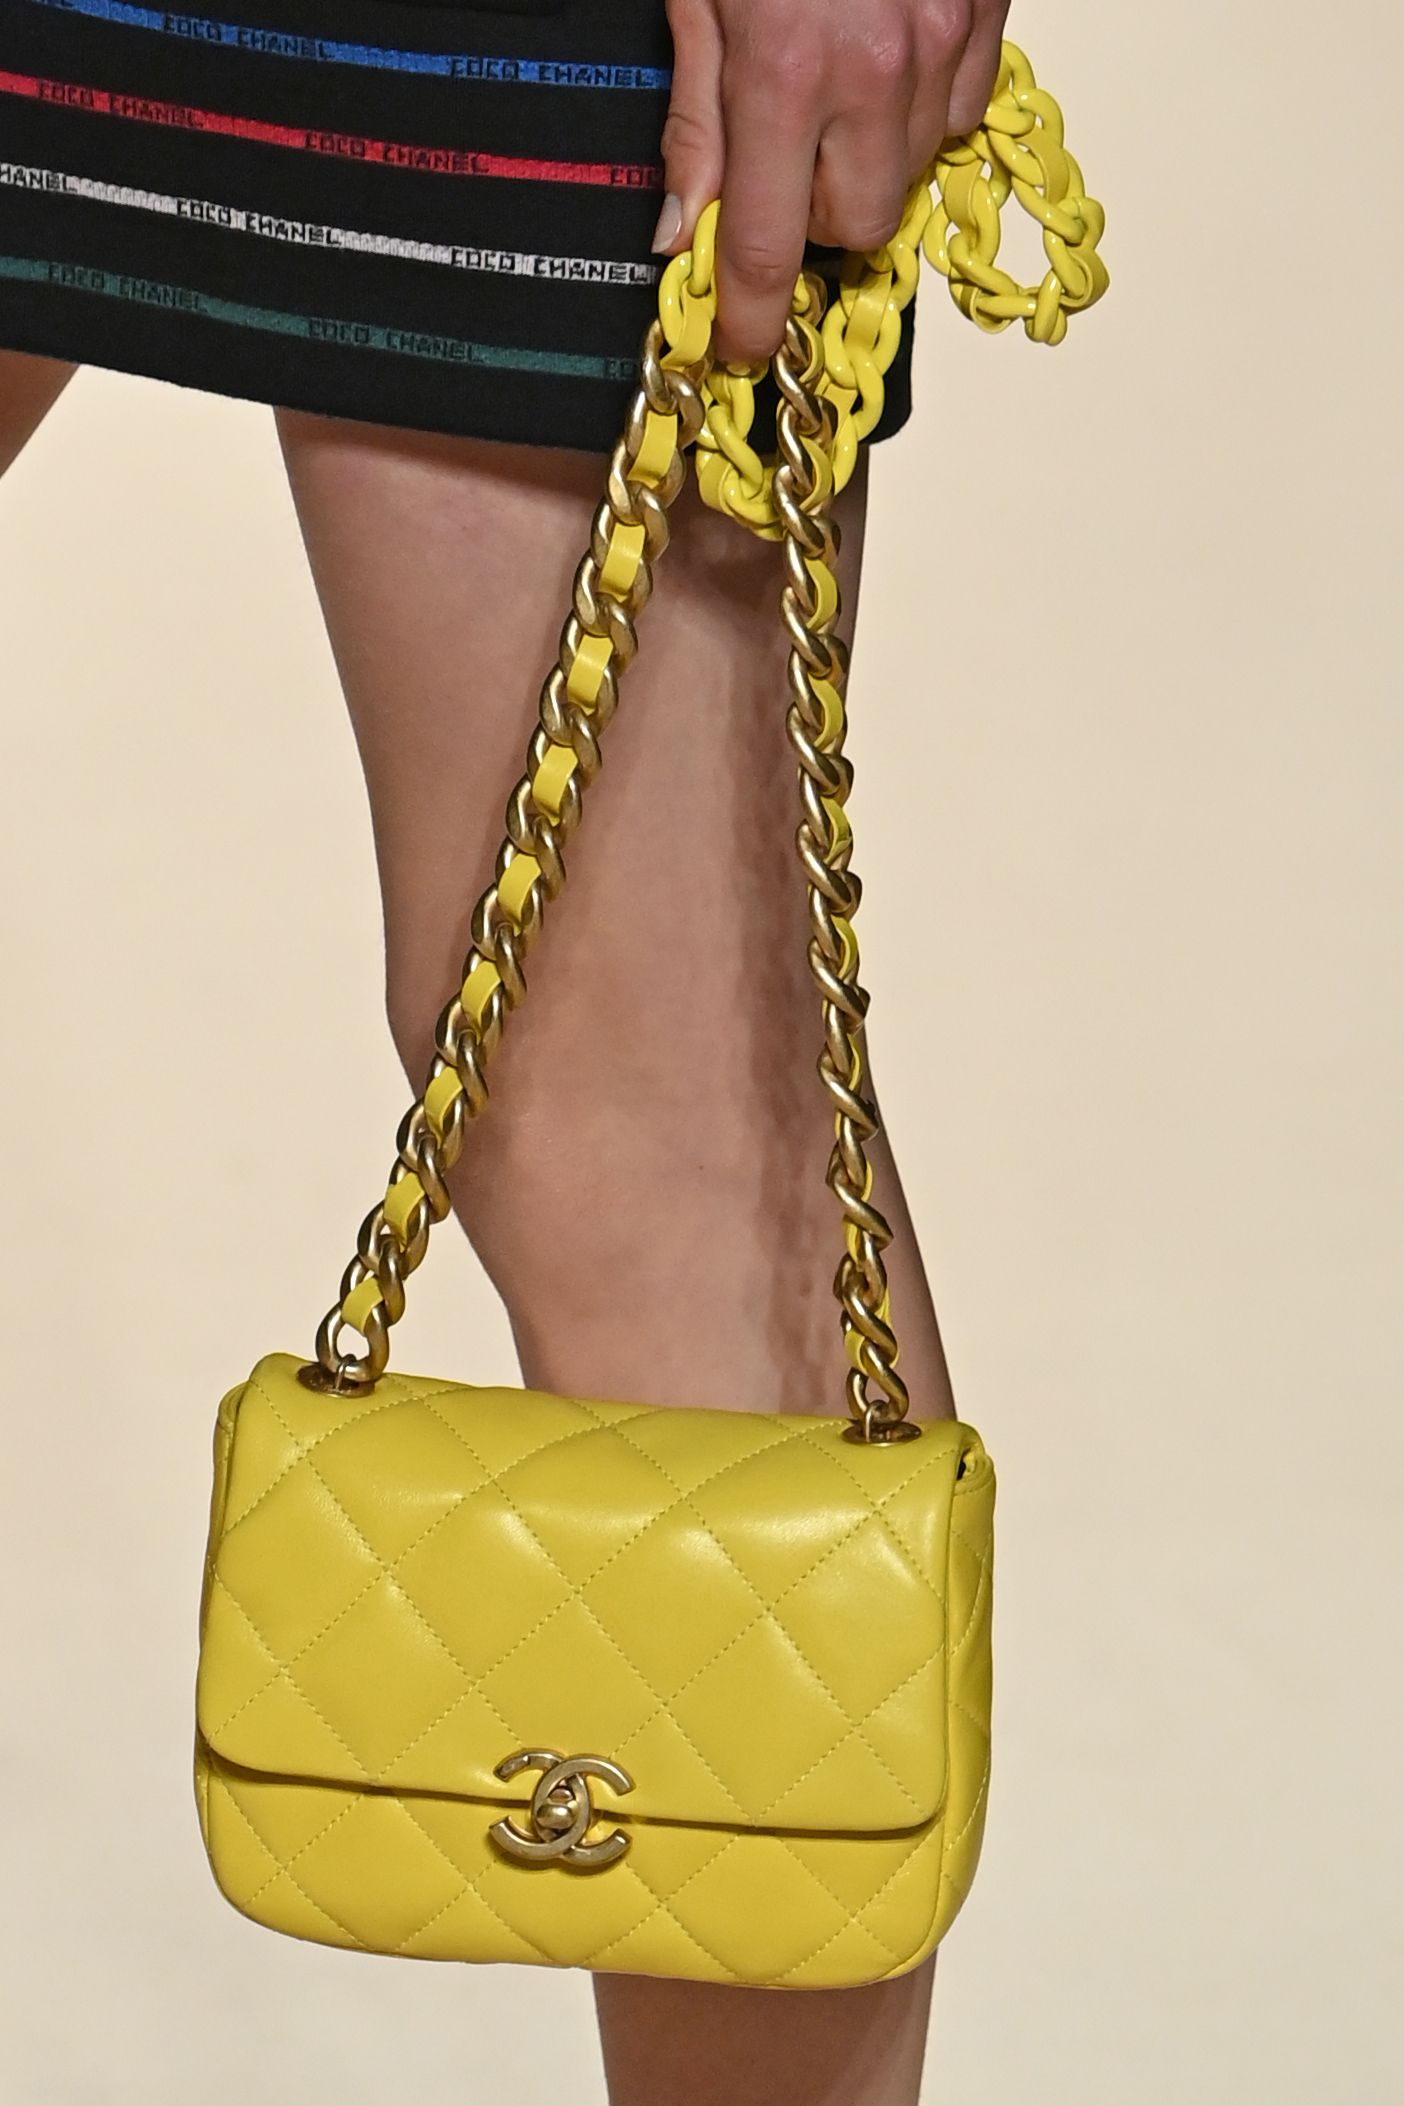 The Chanel Iconic Handbags of SpringSummer 2021  PurseBlog